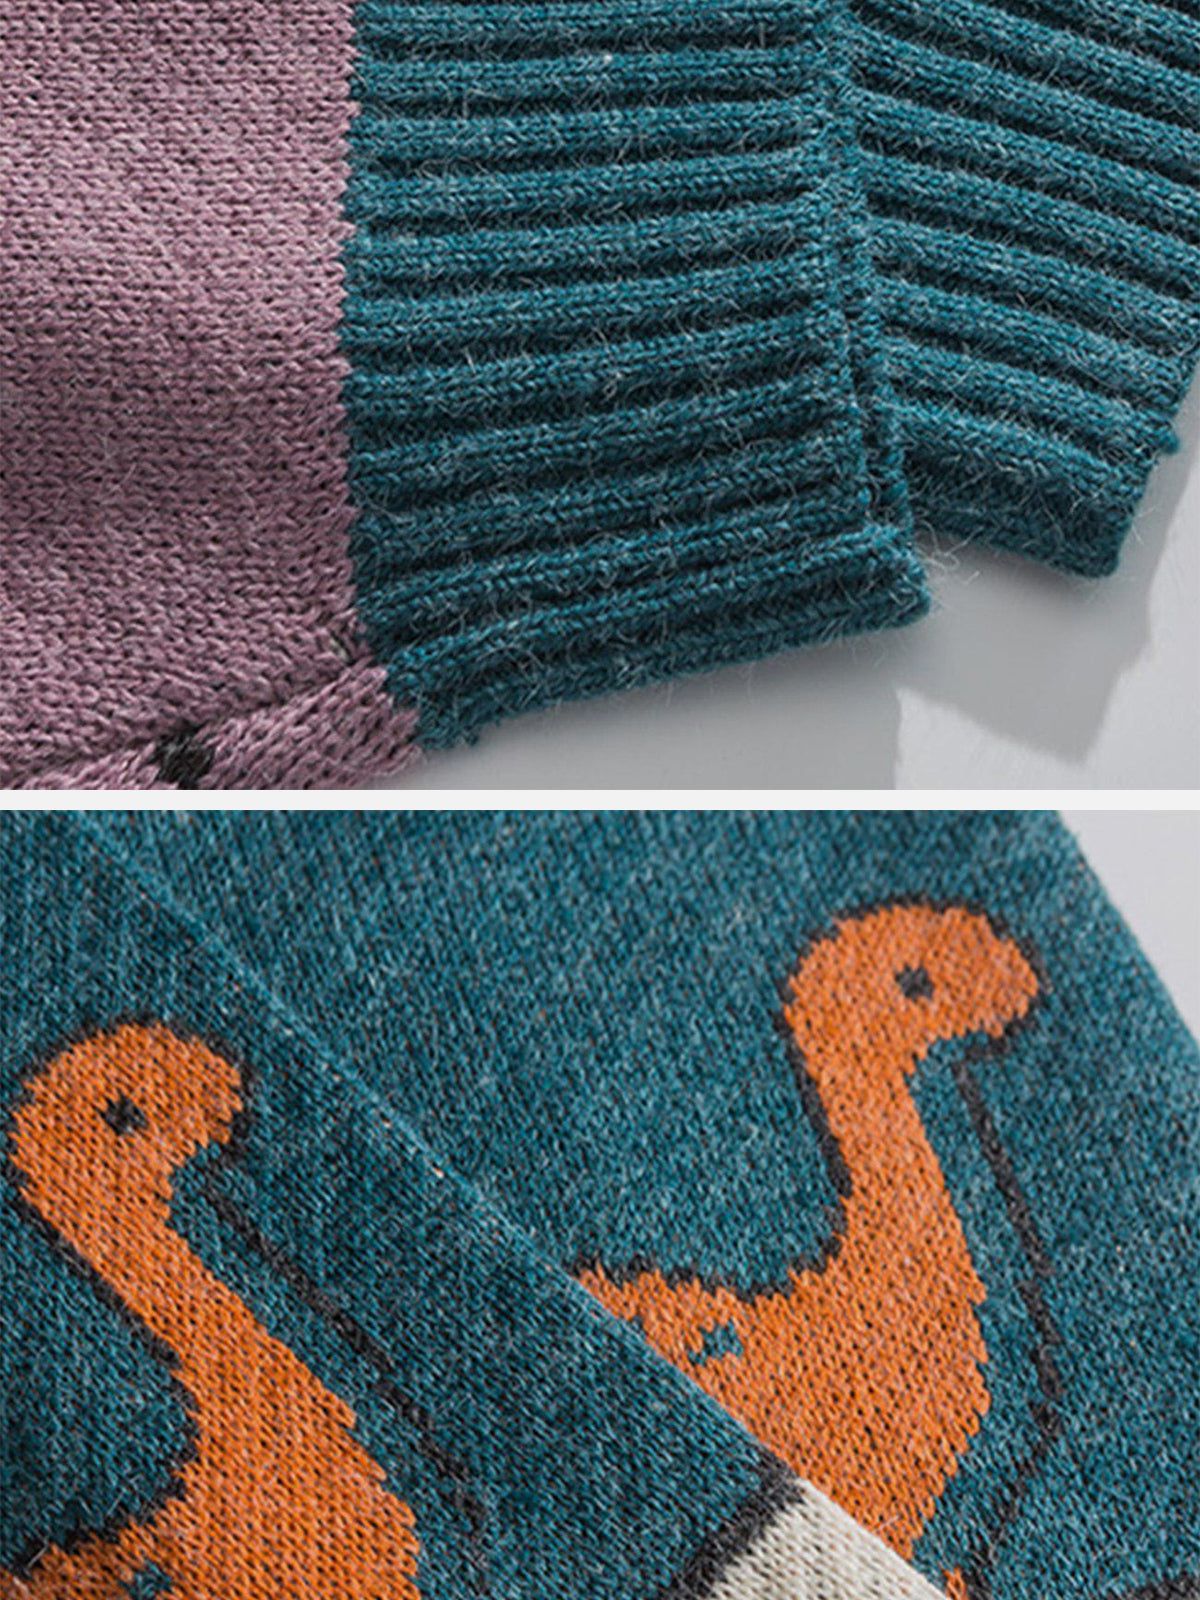 Eprezzy® - Cartoon Little Dinosaur Knit Sweater Streetwear Fashion - eprezzy.com